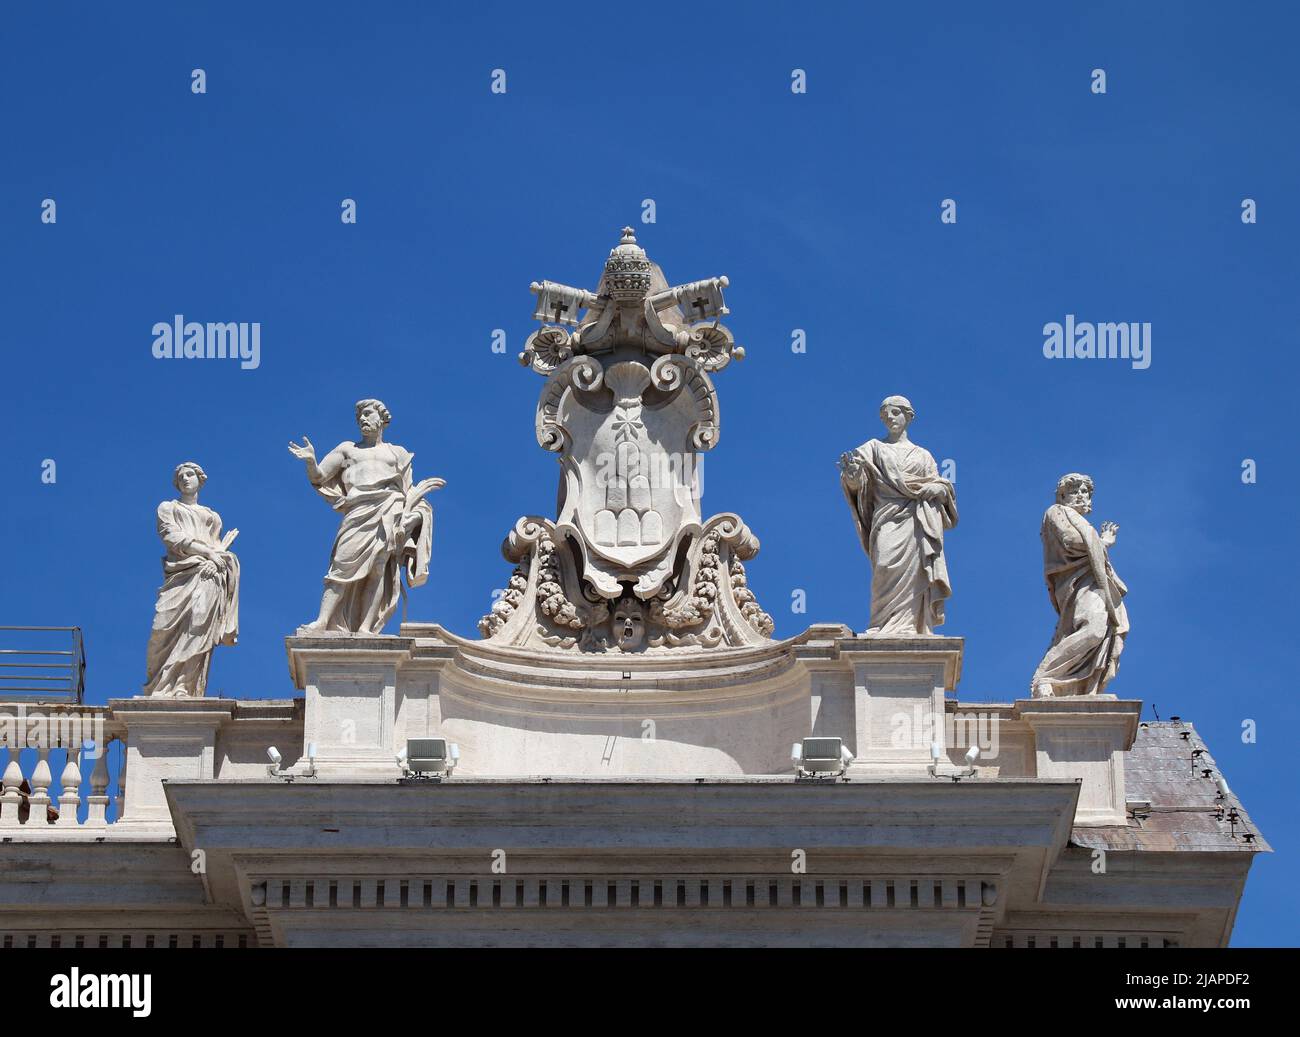 Esculturas neoclasicas fotografías e imágenes de alta resolución - Alamy